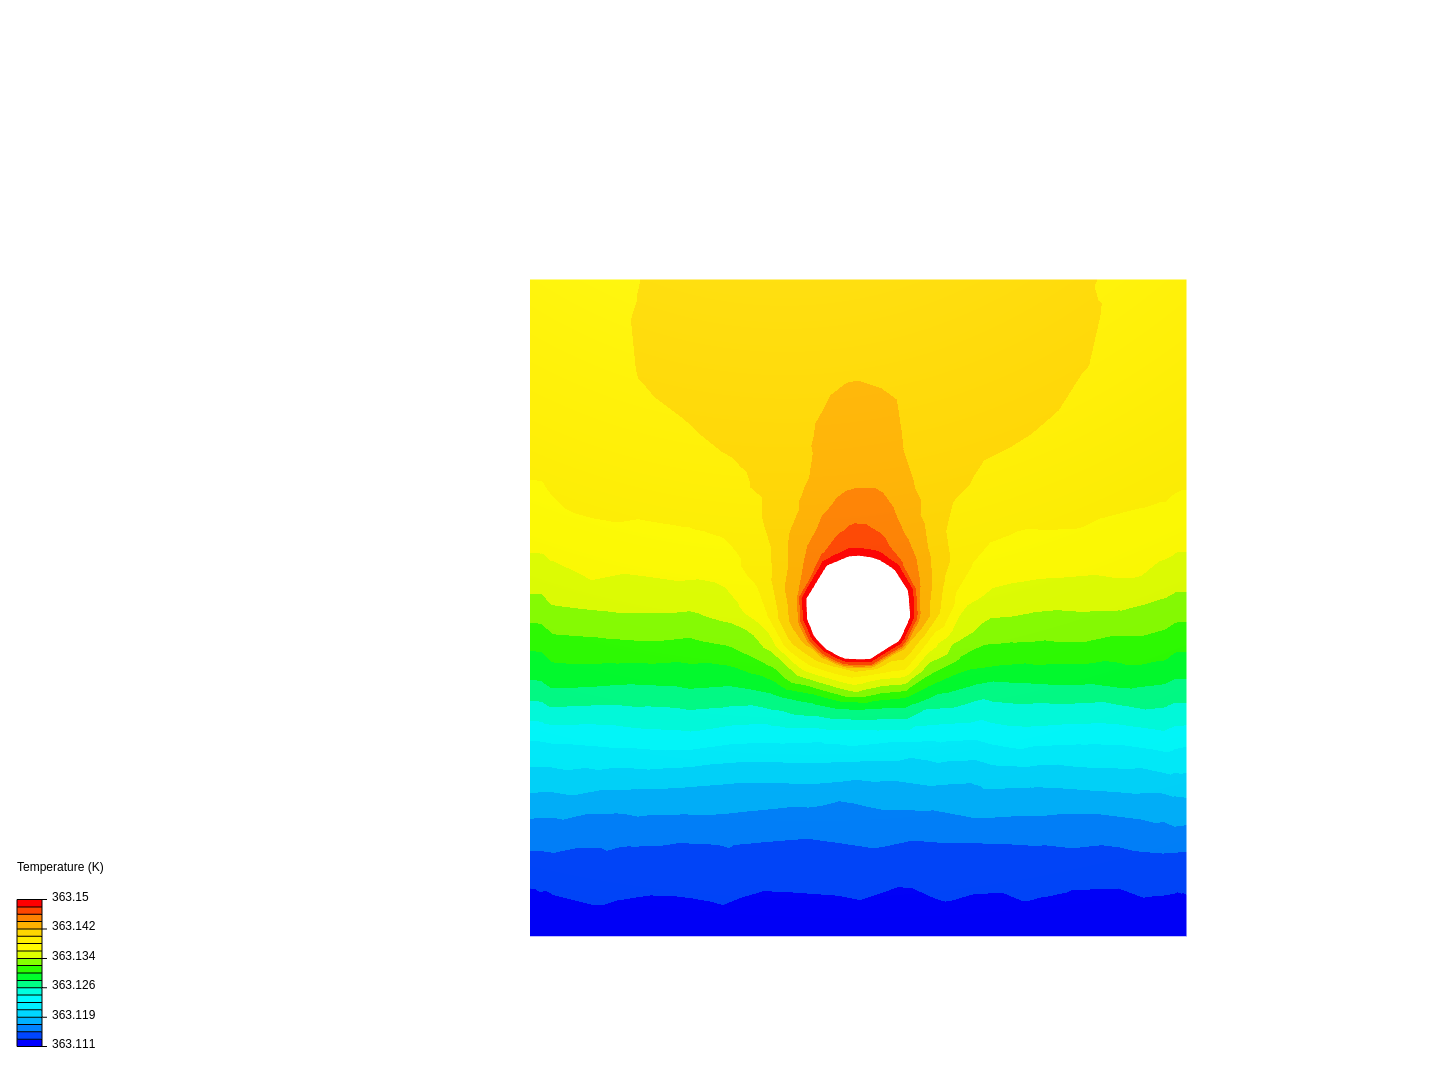 Pipe simulation - Heat image